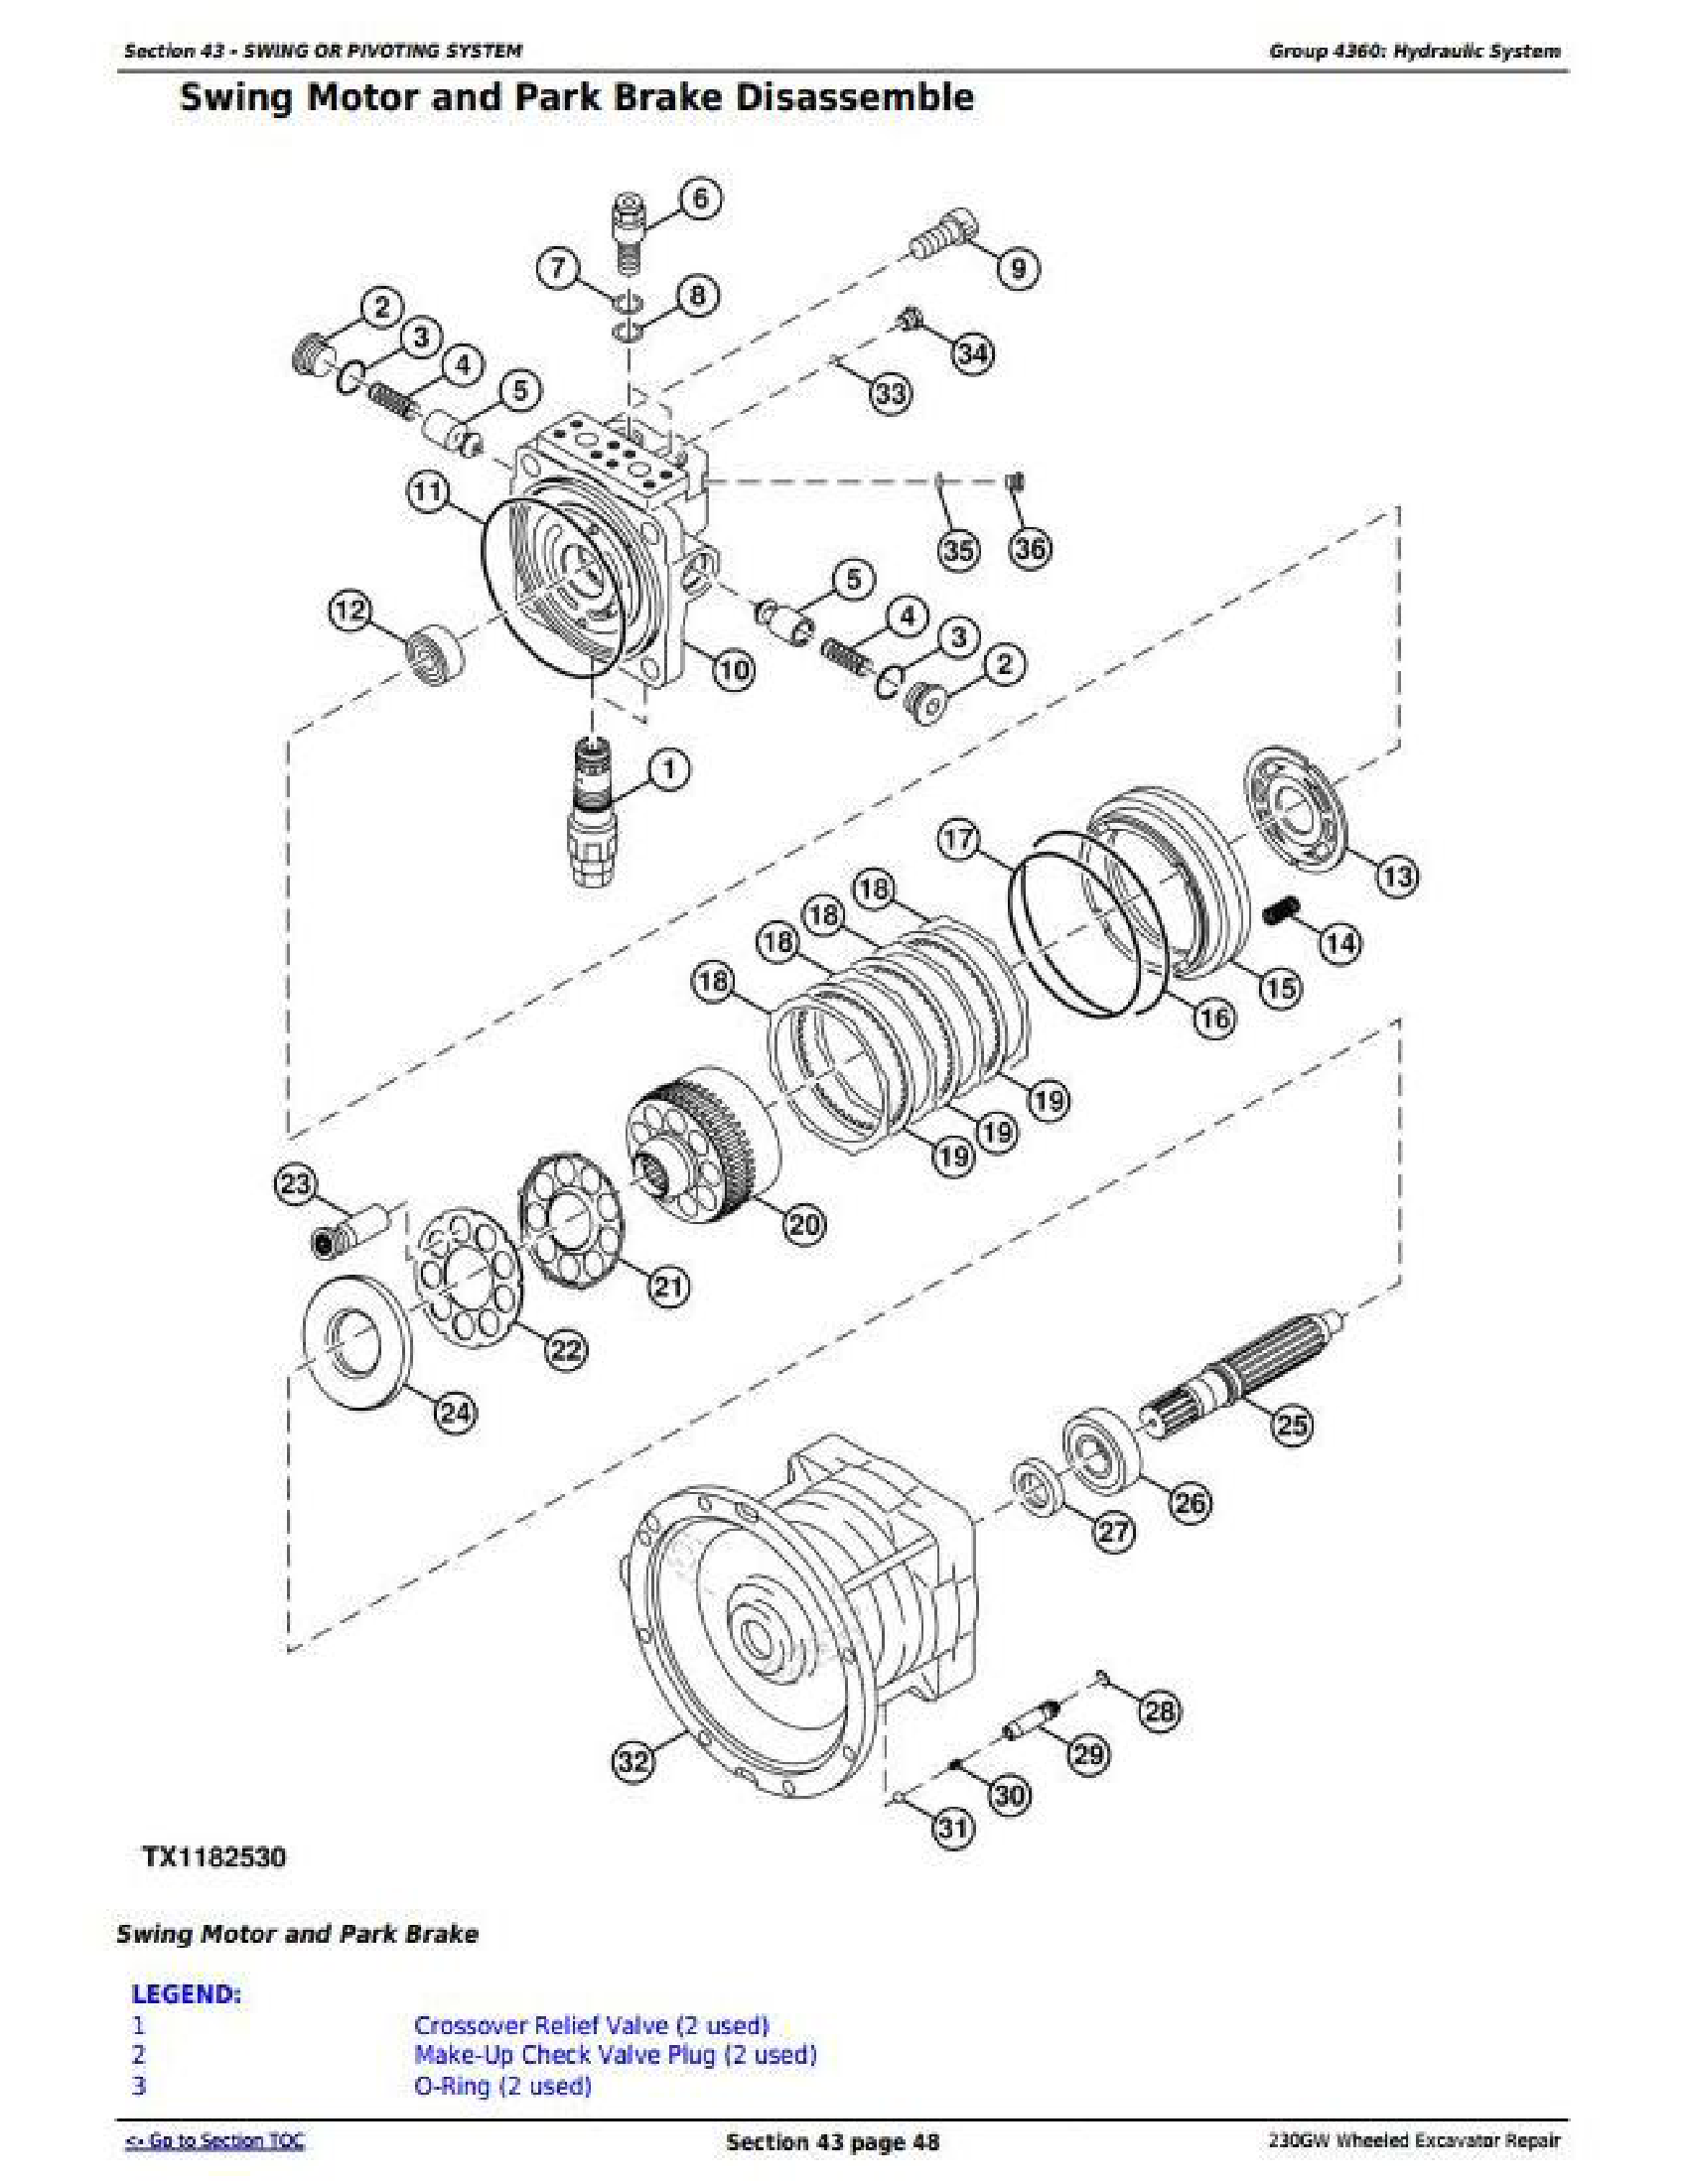 John Deere 230GW manual pdf